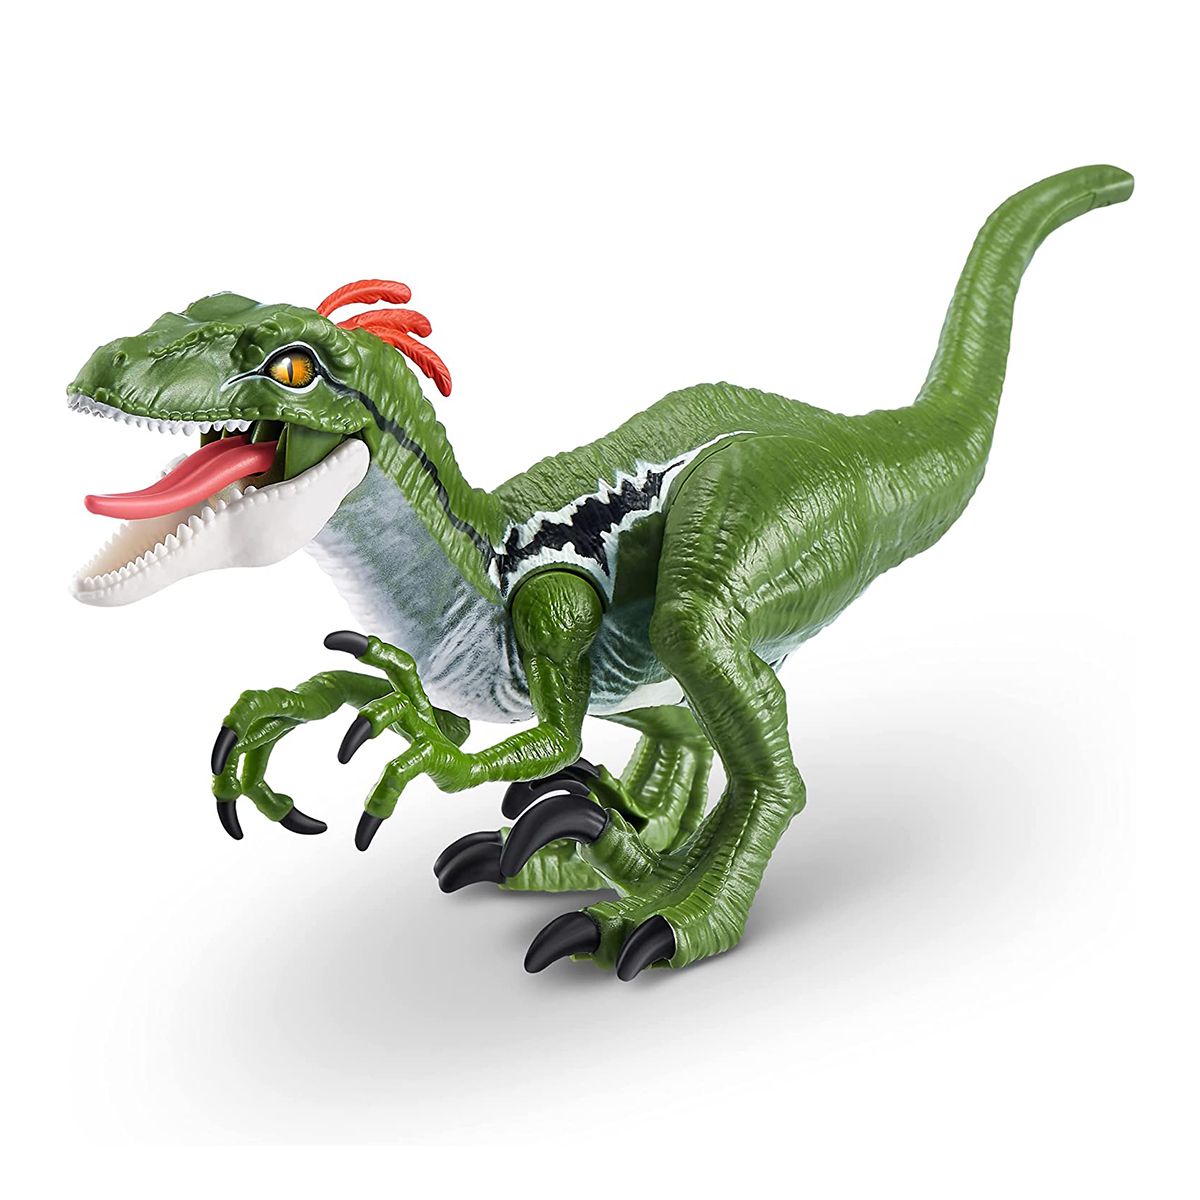 Інтерактивна іграшка "Dino Action: Раптор"